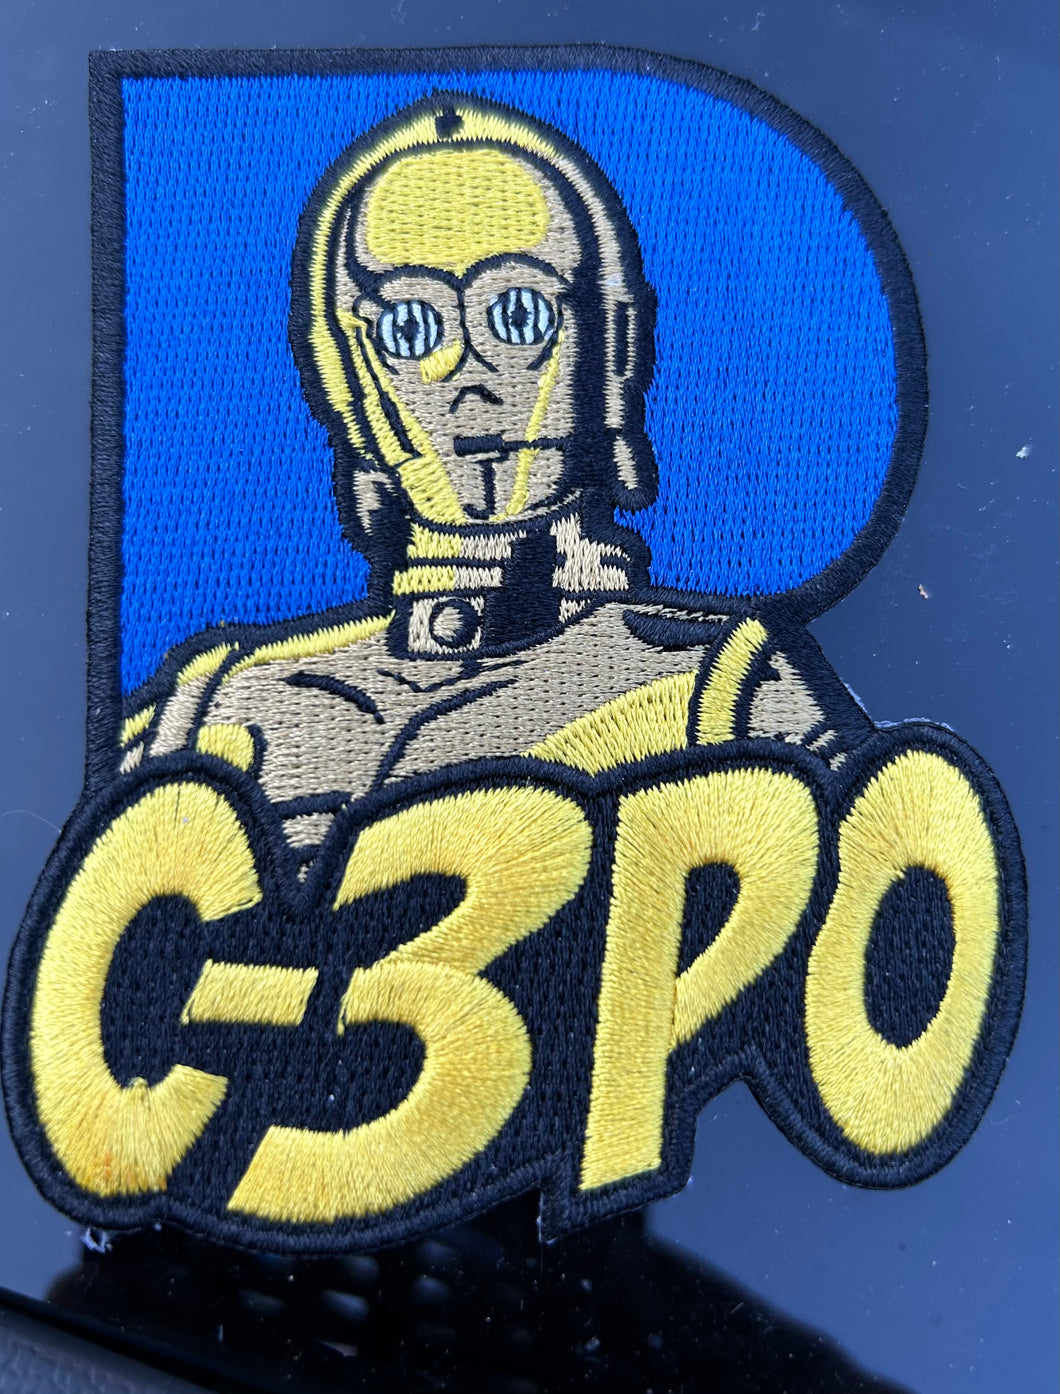 C-3PO Exclusive Patch